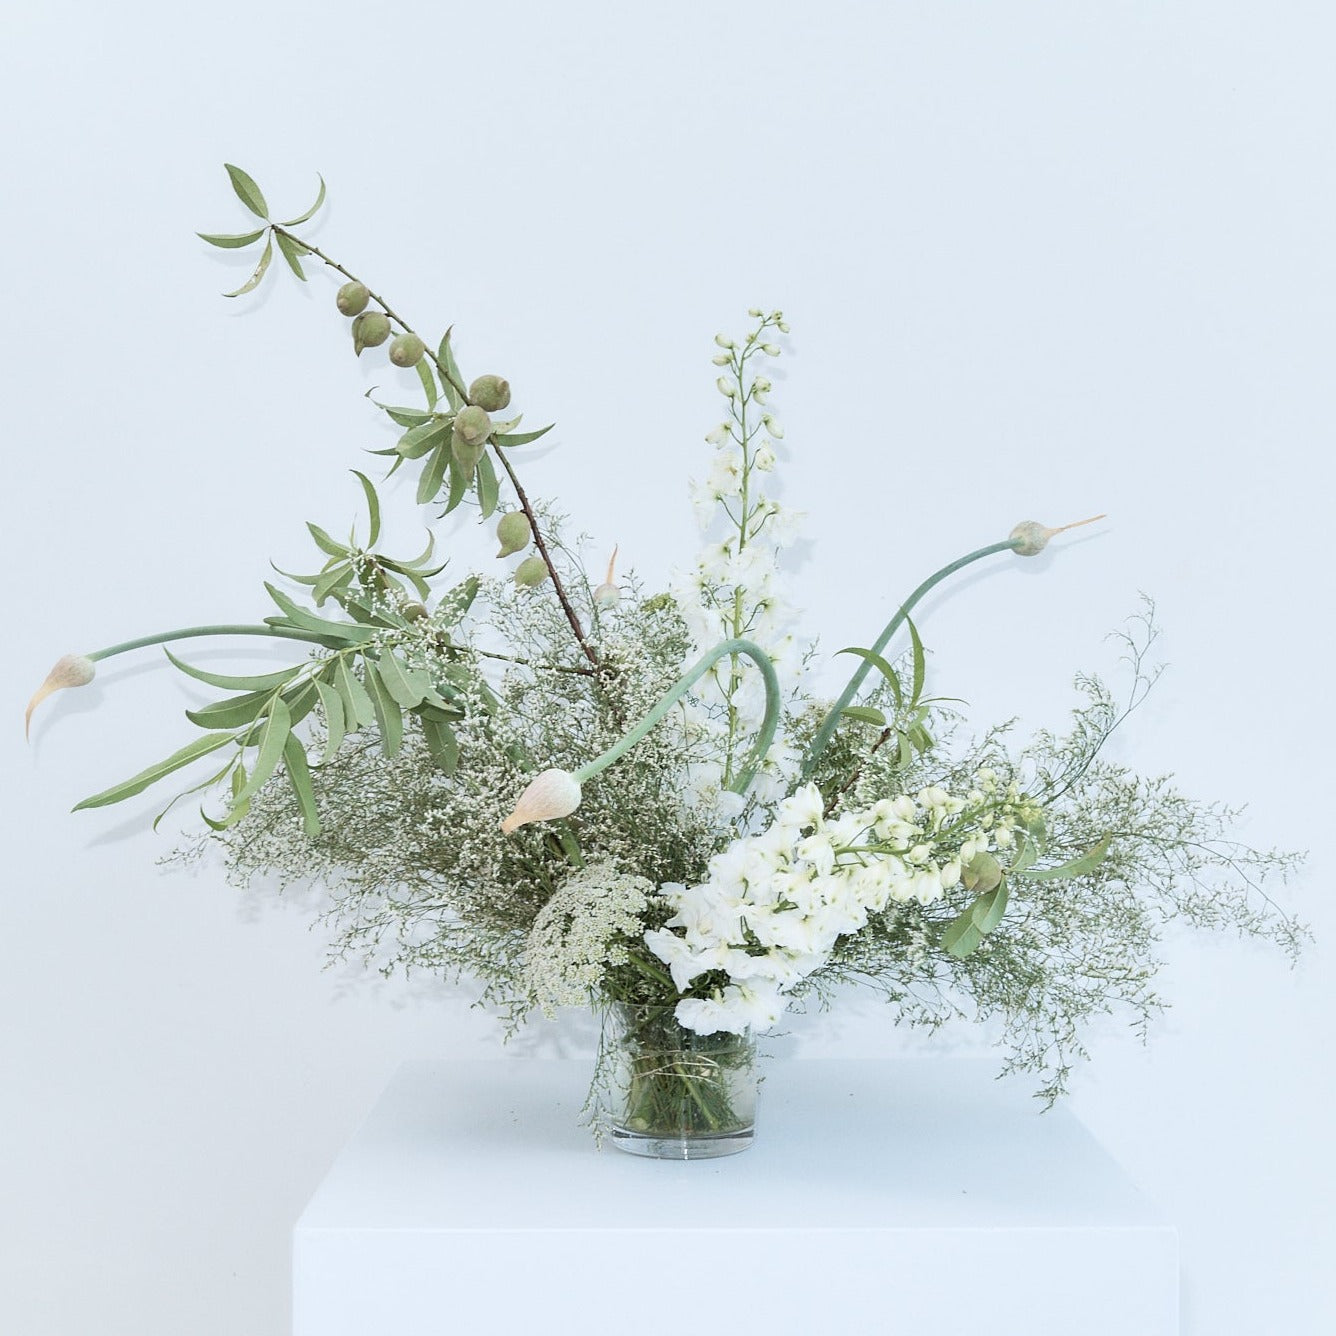 Celebration flowers taken by Claudia Smith | Braer Studio